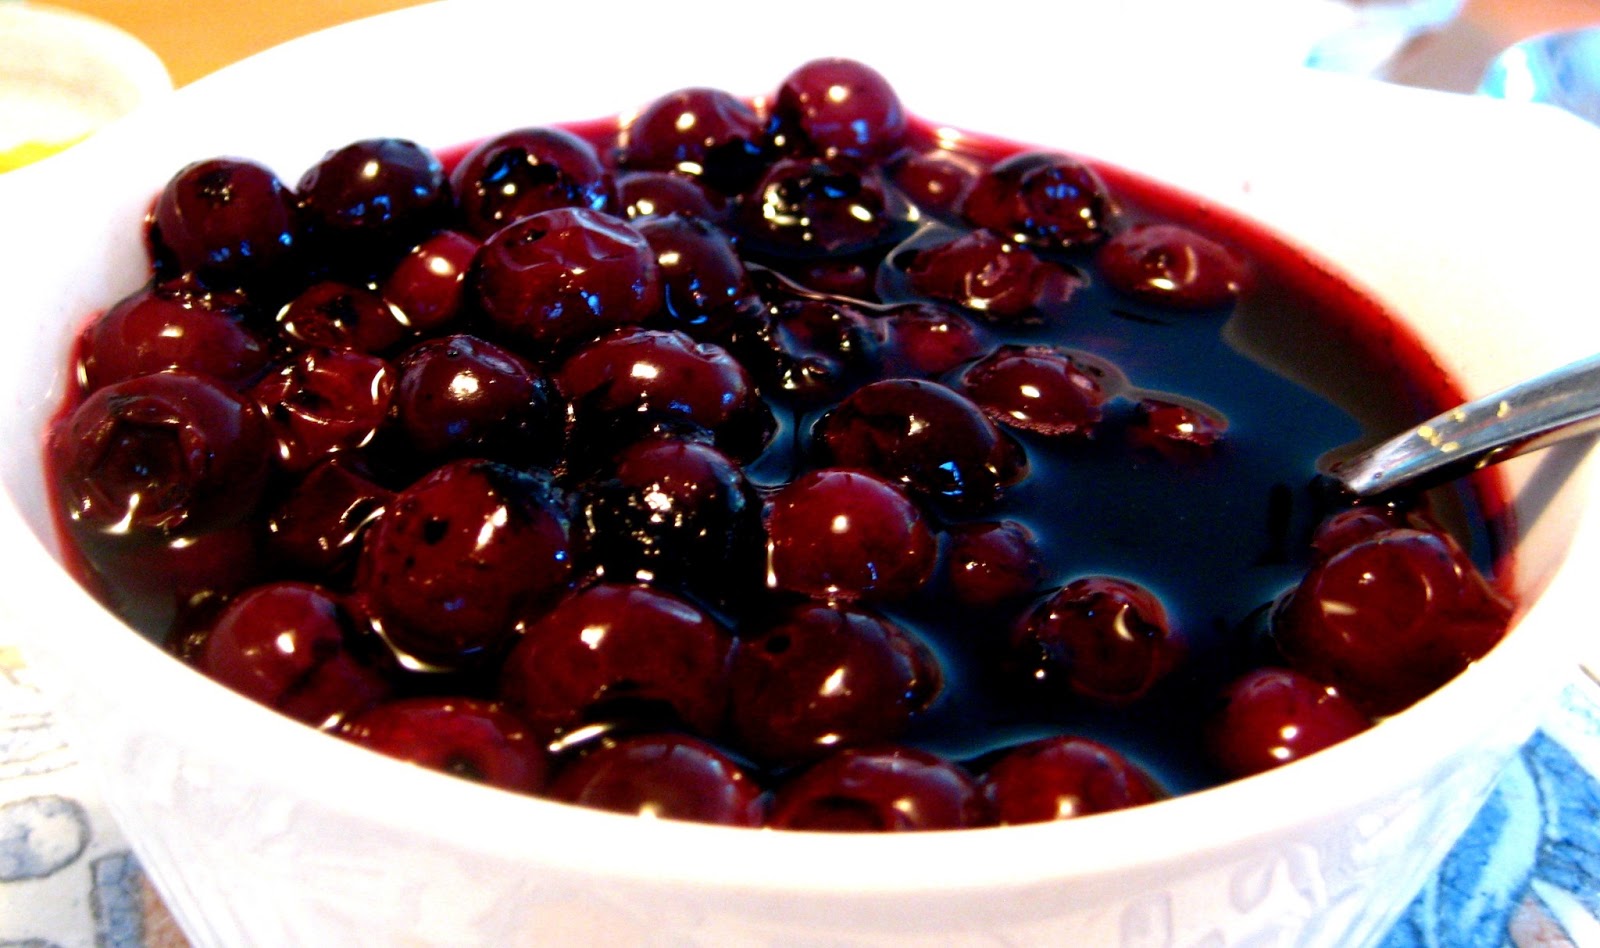 http://3.bp.blogspot.com/--dBtPs-fU0g/UOeGVD4hs0I/AAAAAAAABsY/qTi0YxAEoVE/s1600/nye+balsamic+blueberries.JPG